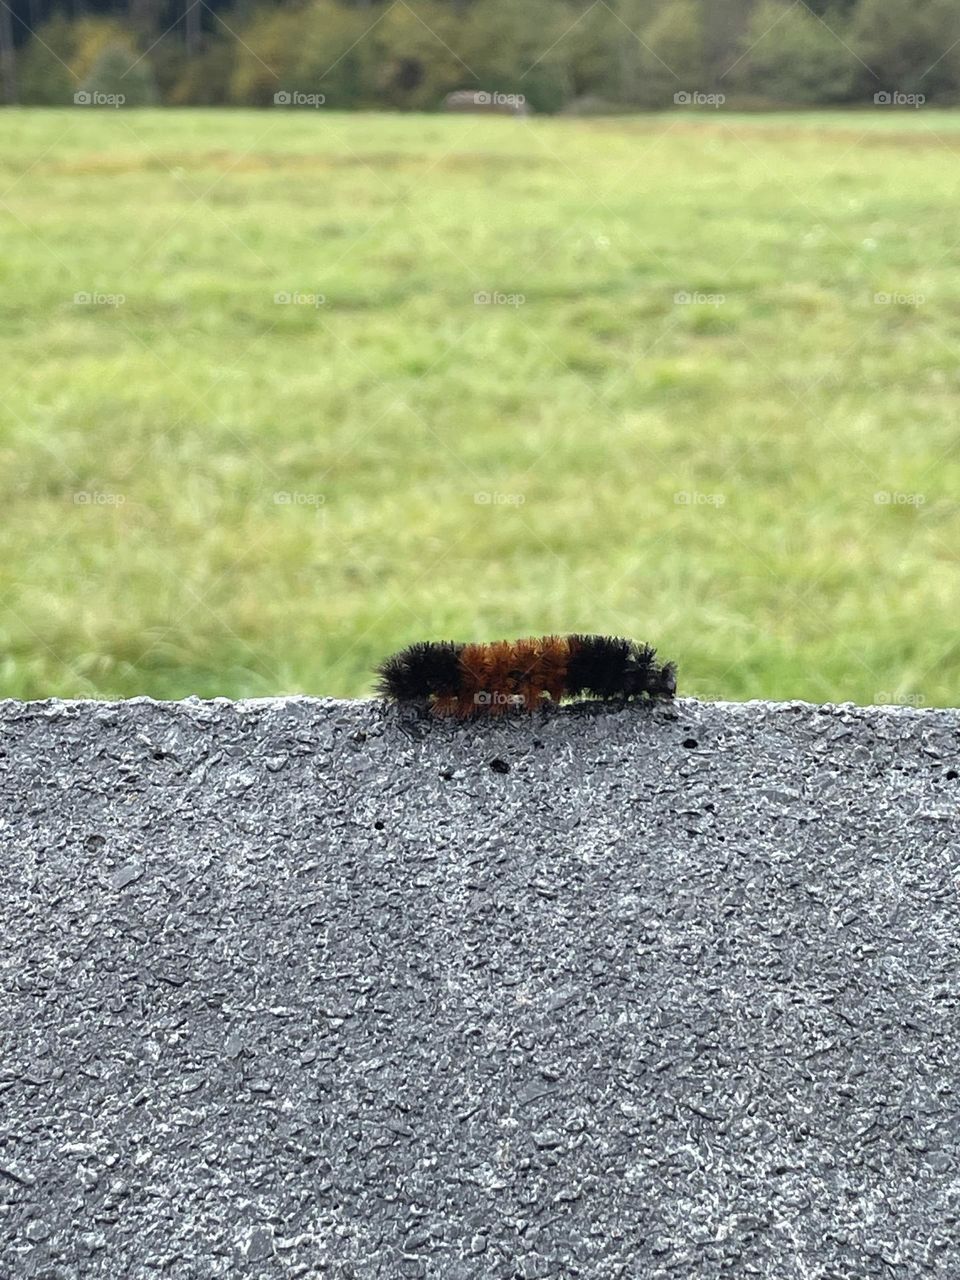 fuzzy caterpillar at united 93 memorial